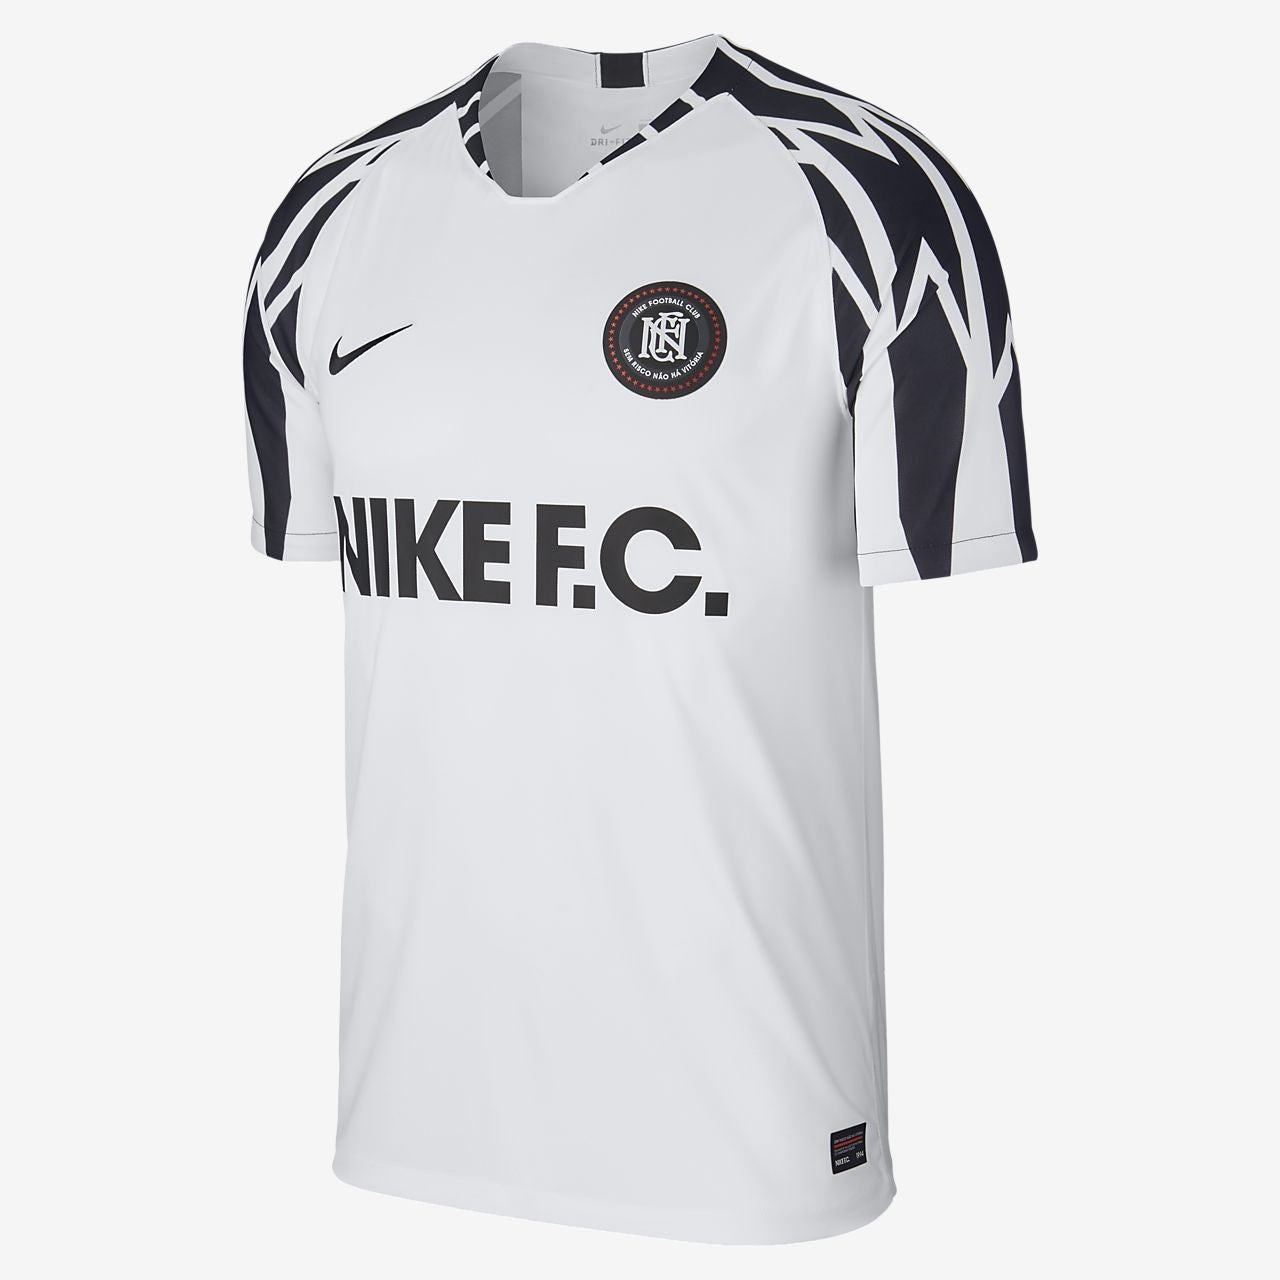 Nike F.C. Home Shirt White